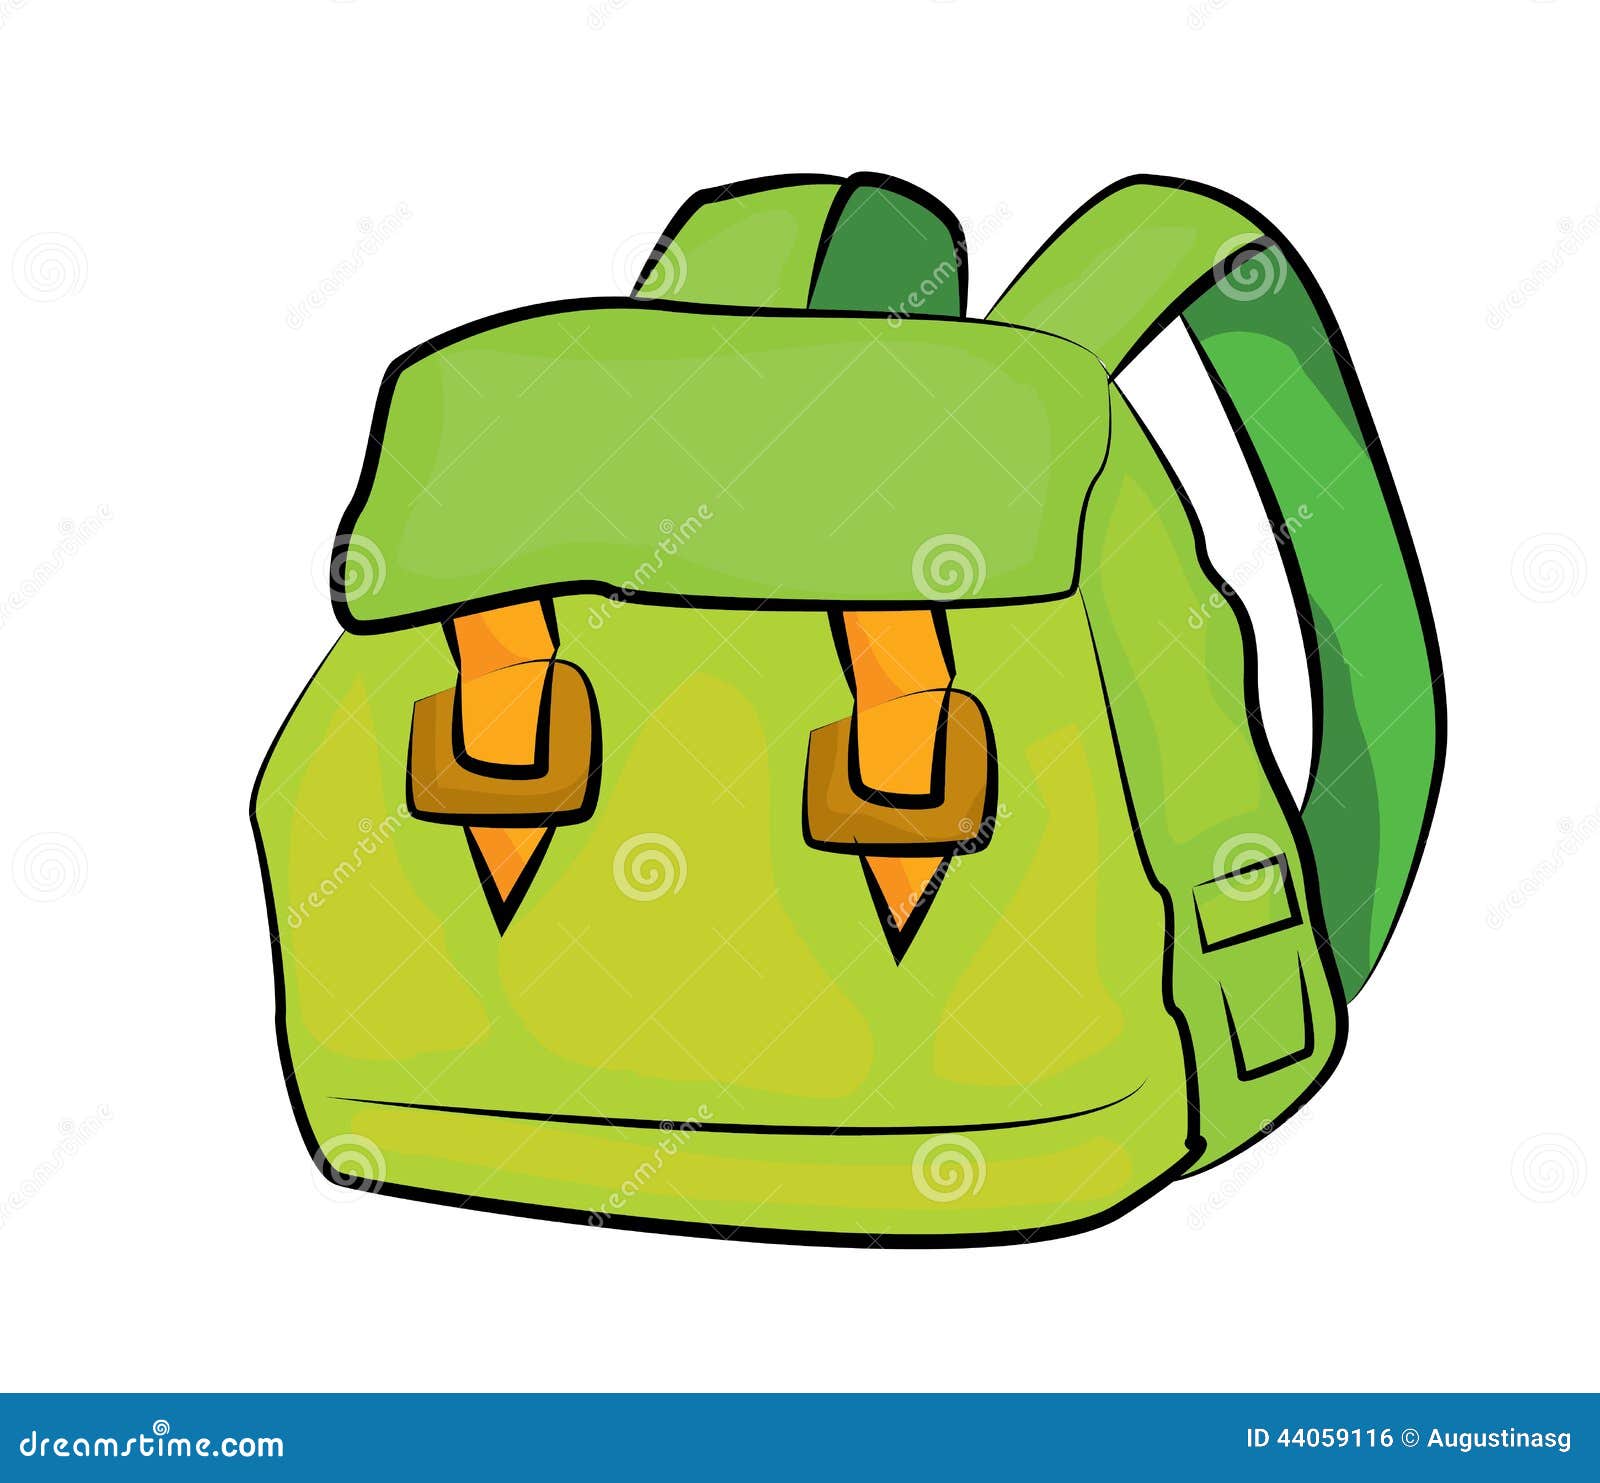 School bag cartoon stock illustration. Illustration of object - 44059116